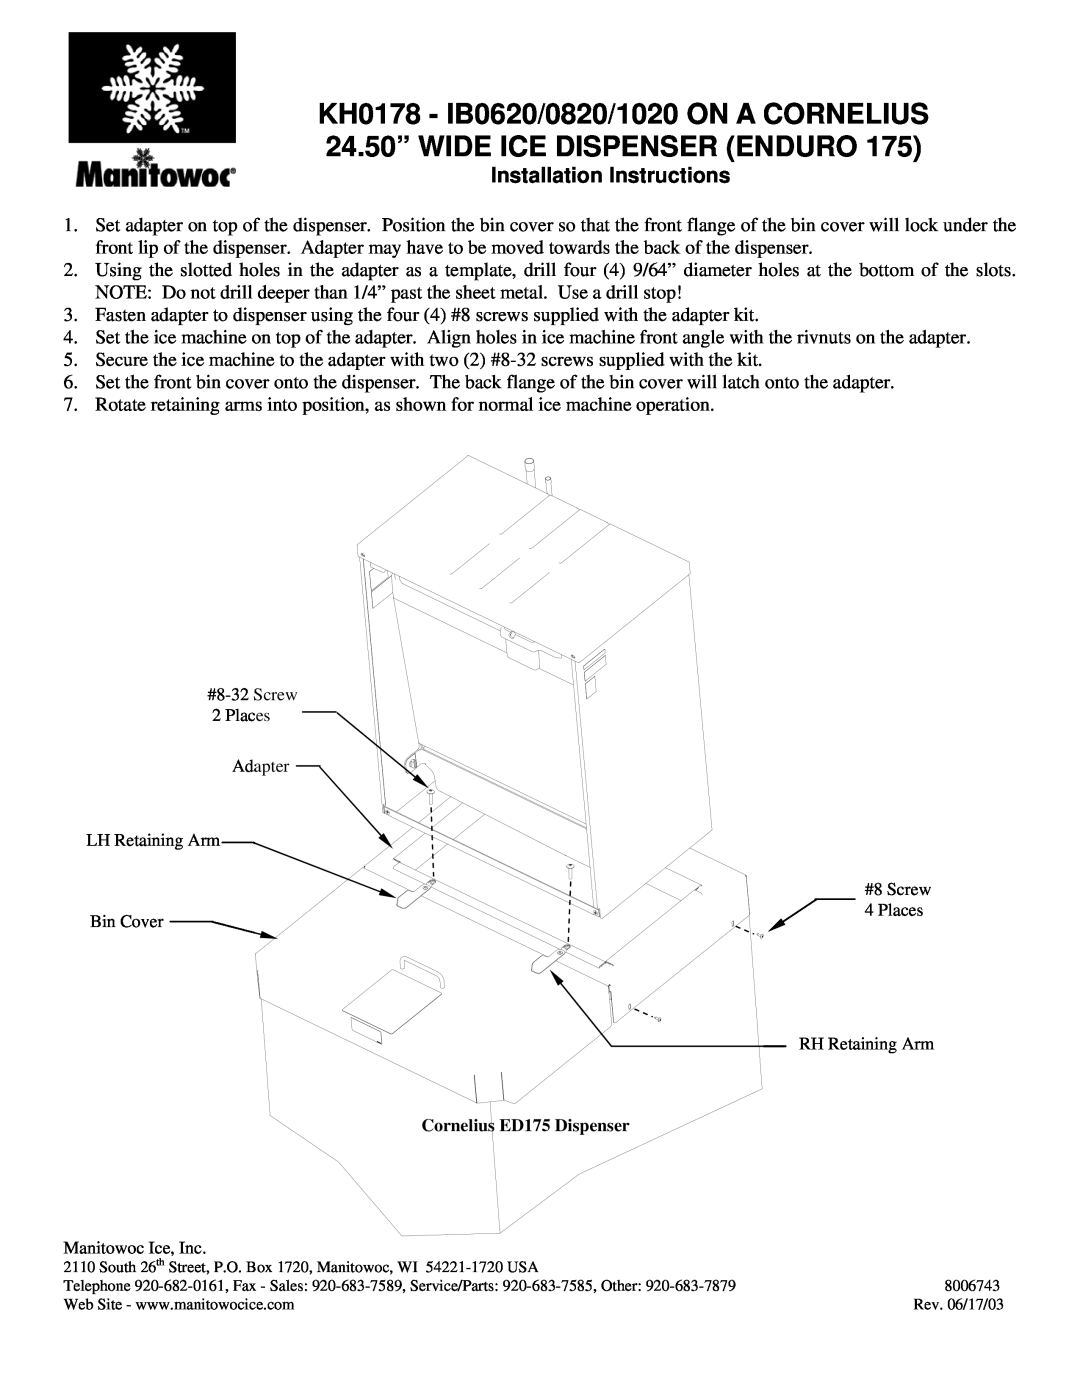 Manitowoc Ice KH0178 installation instructions Installation Instructions, Cornelius ED175 Dispenser 